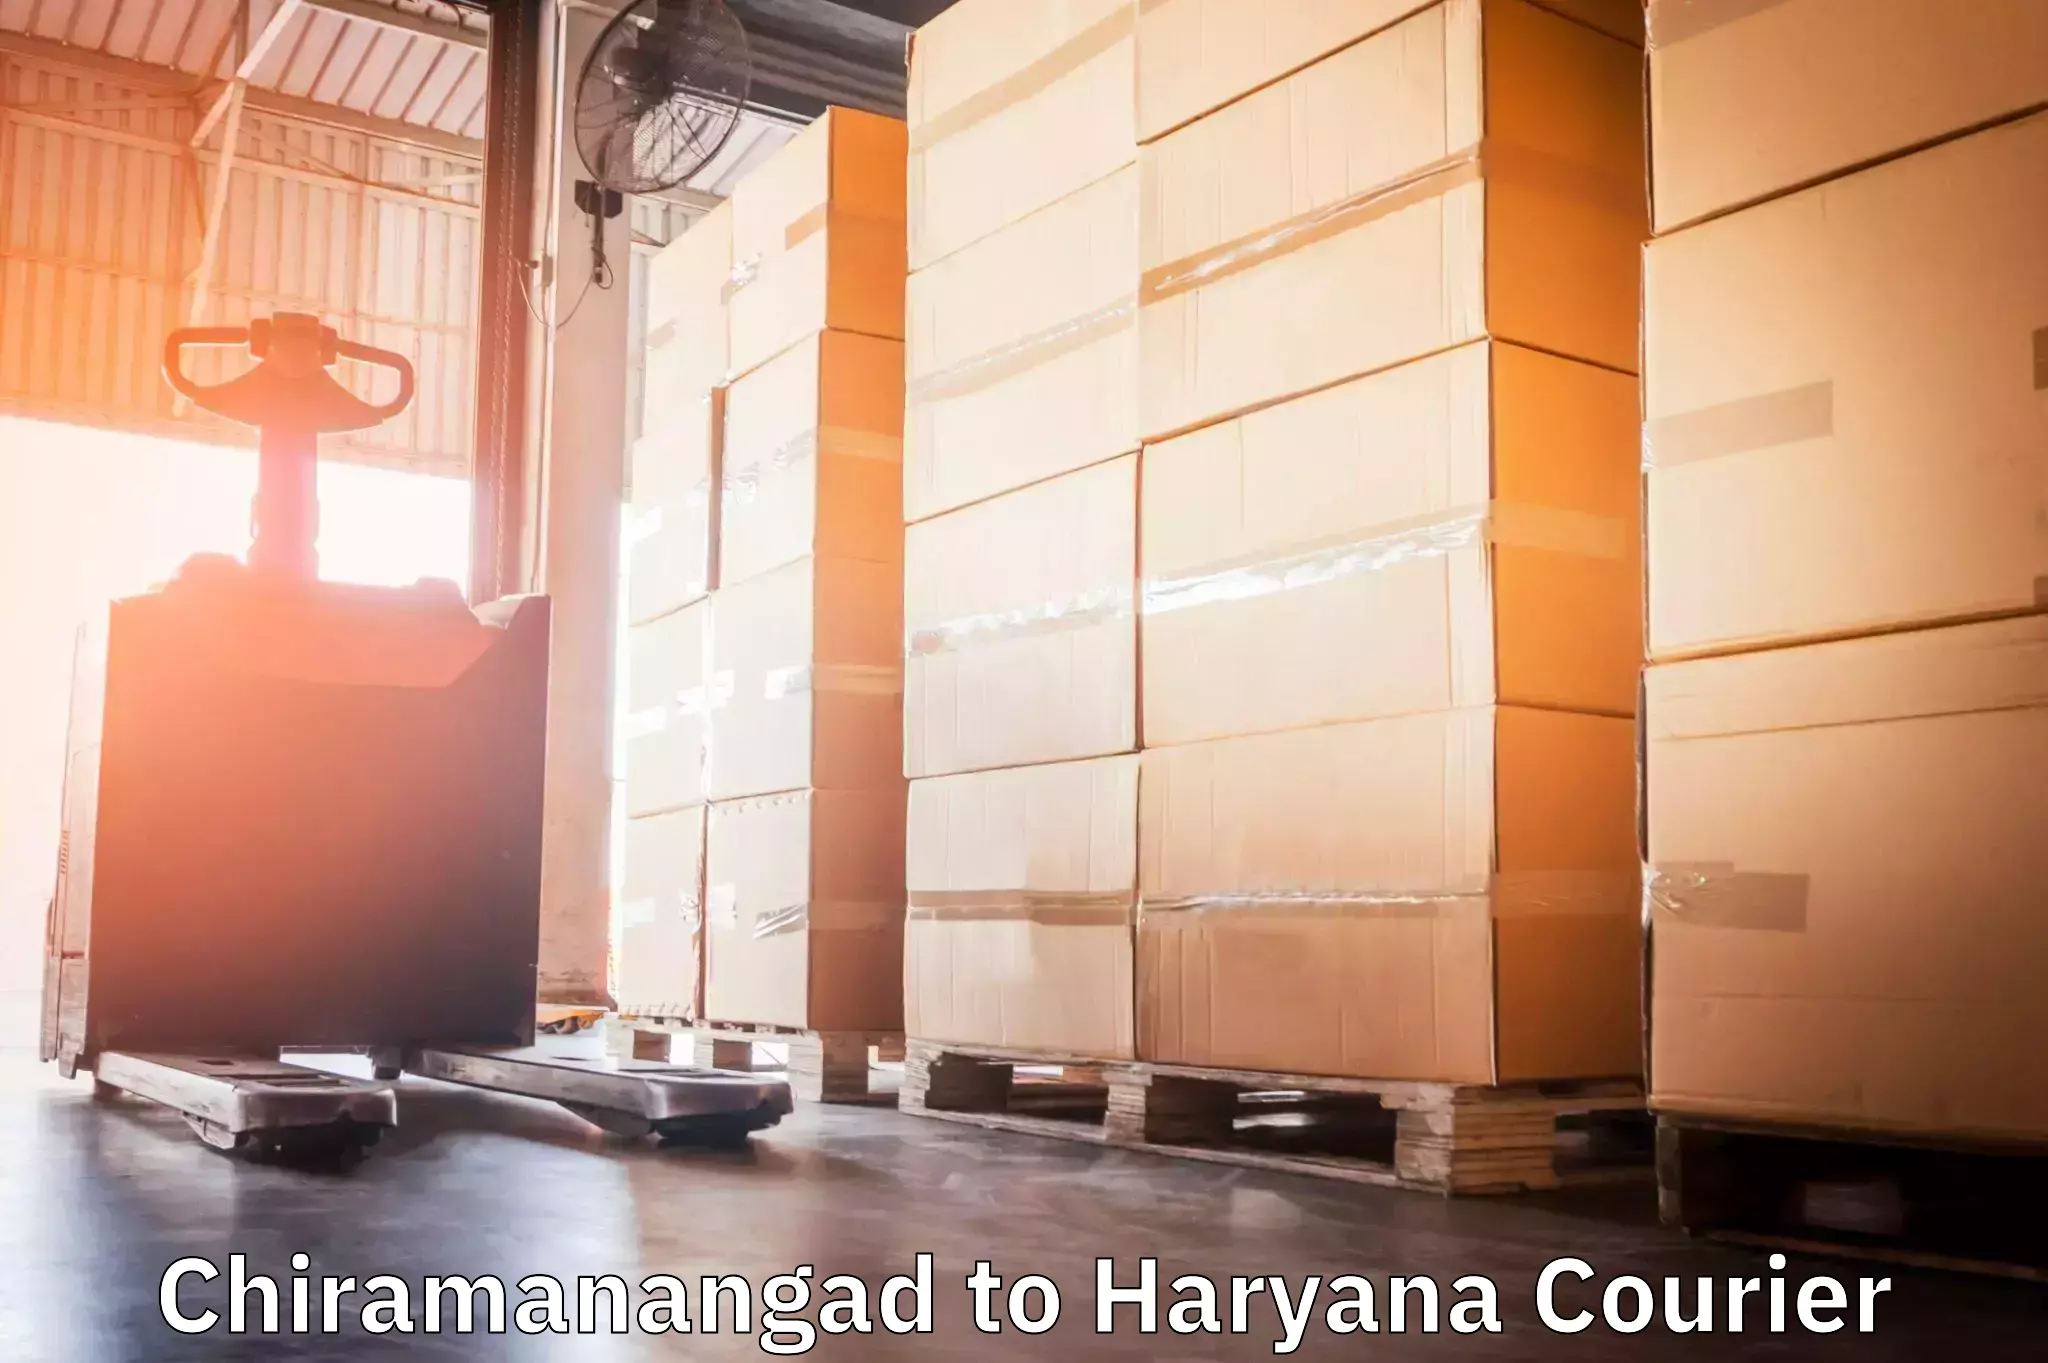 High-speed delivery Chiramanangad to Haryana